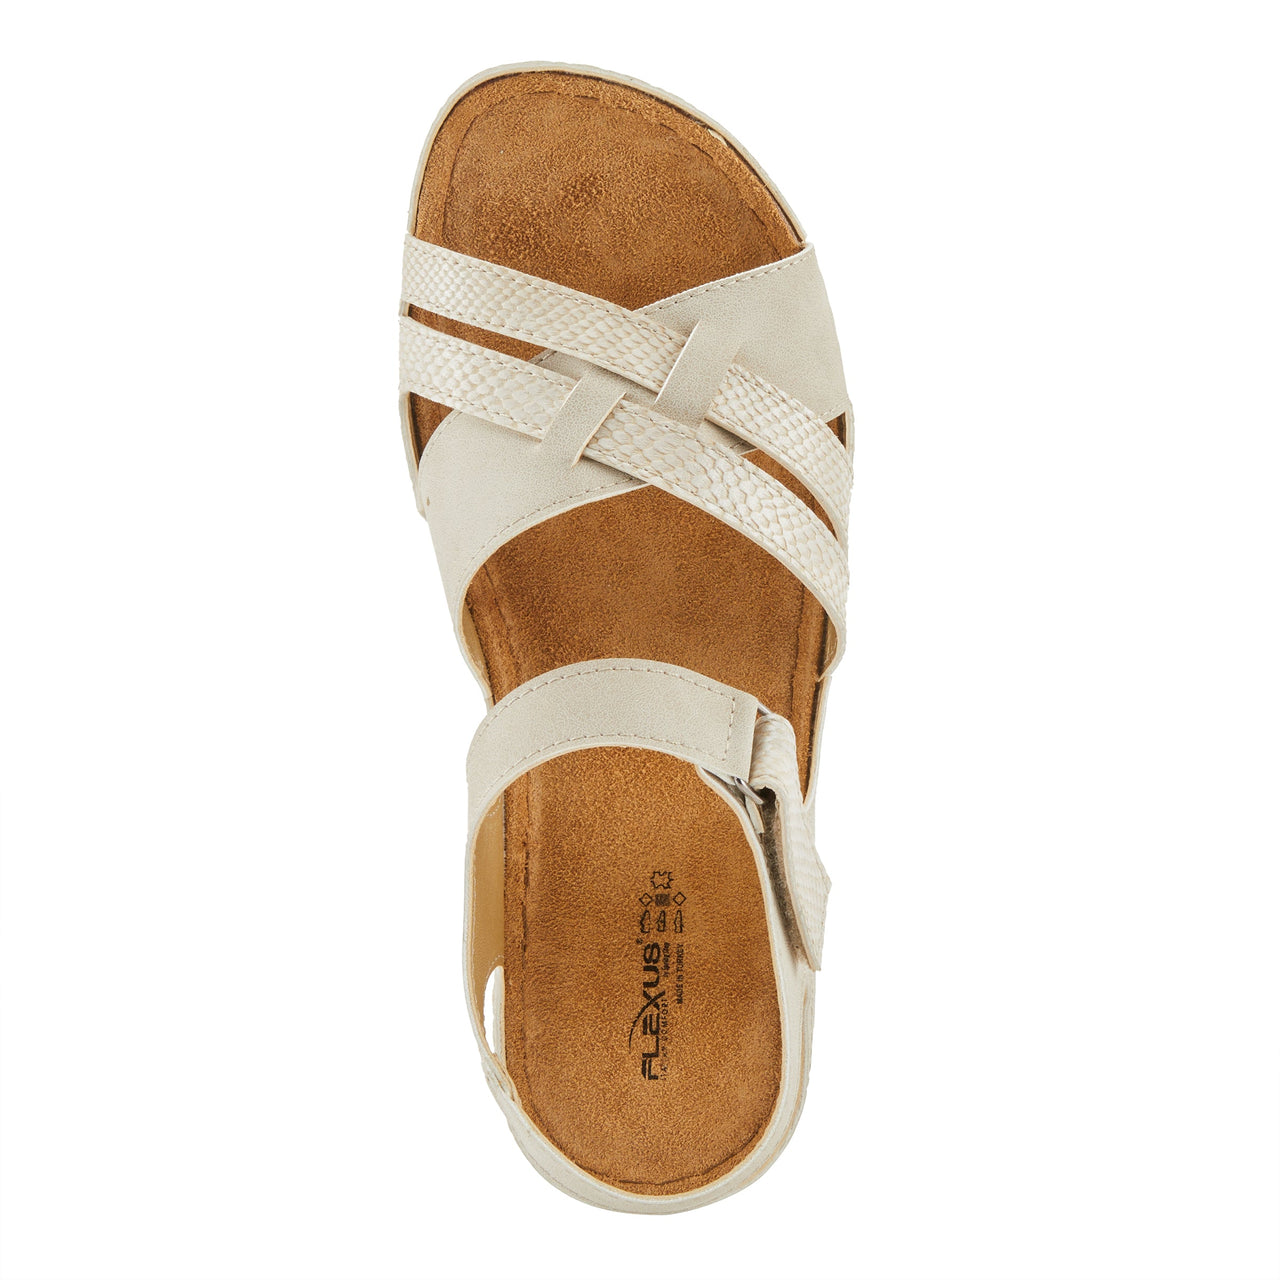 Spring Step Shoes Flexus Alvina Sandals - Back View with adjustable straps